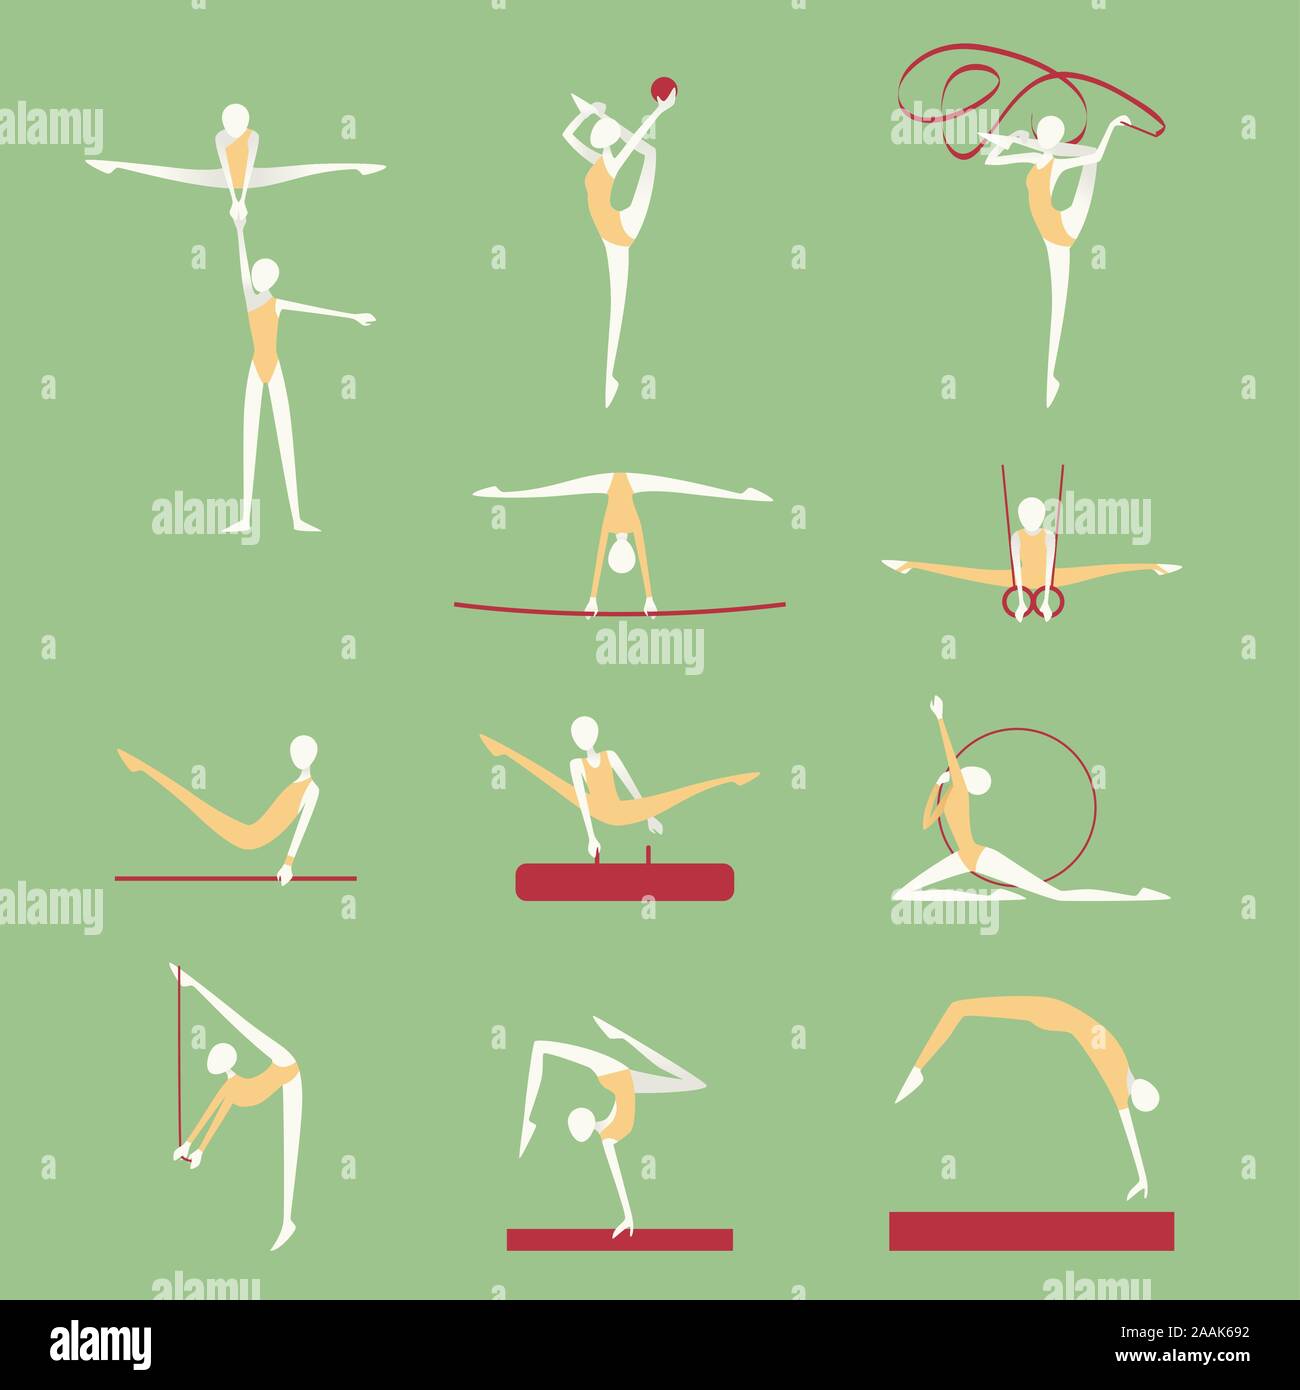 Gymnastics & Athletics Poses Positions Icons. Vector illustration cartoon. Stock Vector